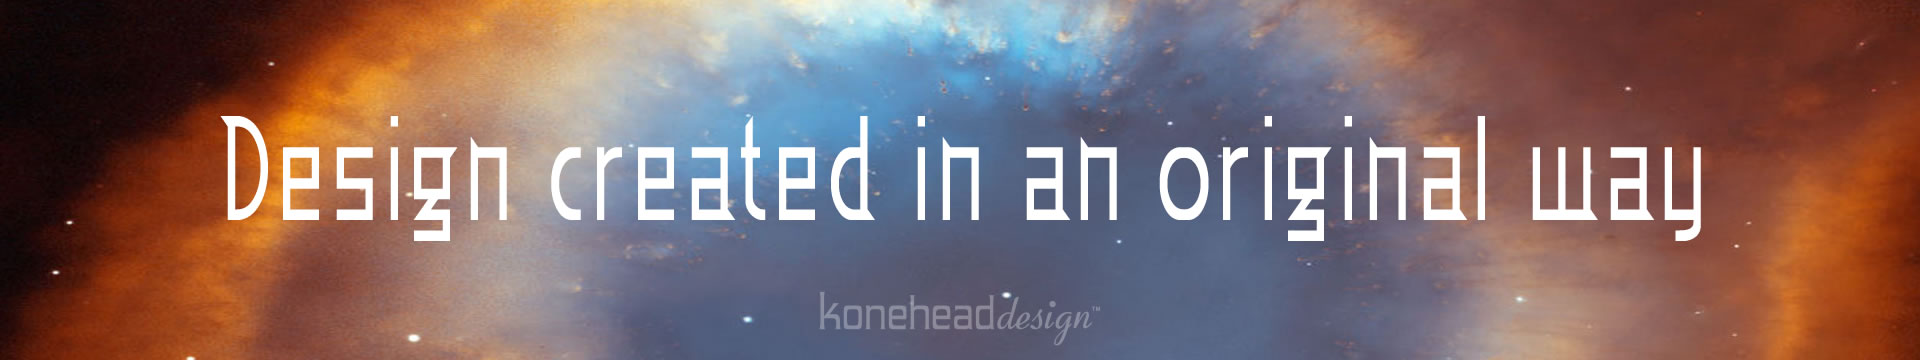 konehead design hdr created